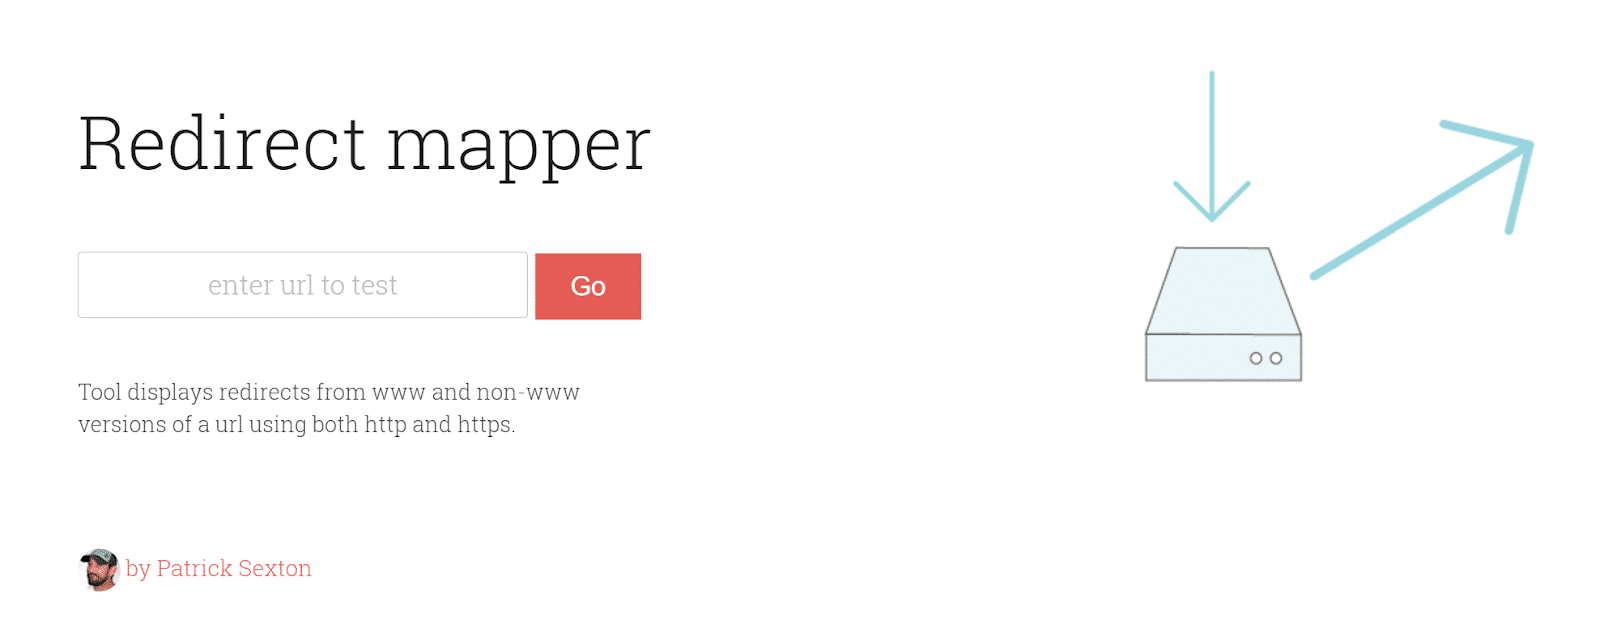 De Redirect mapper tool